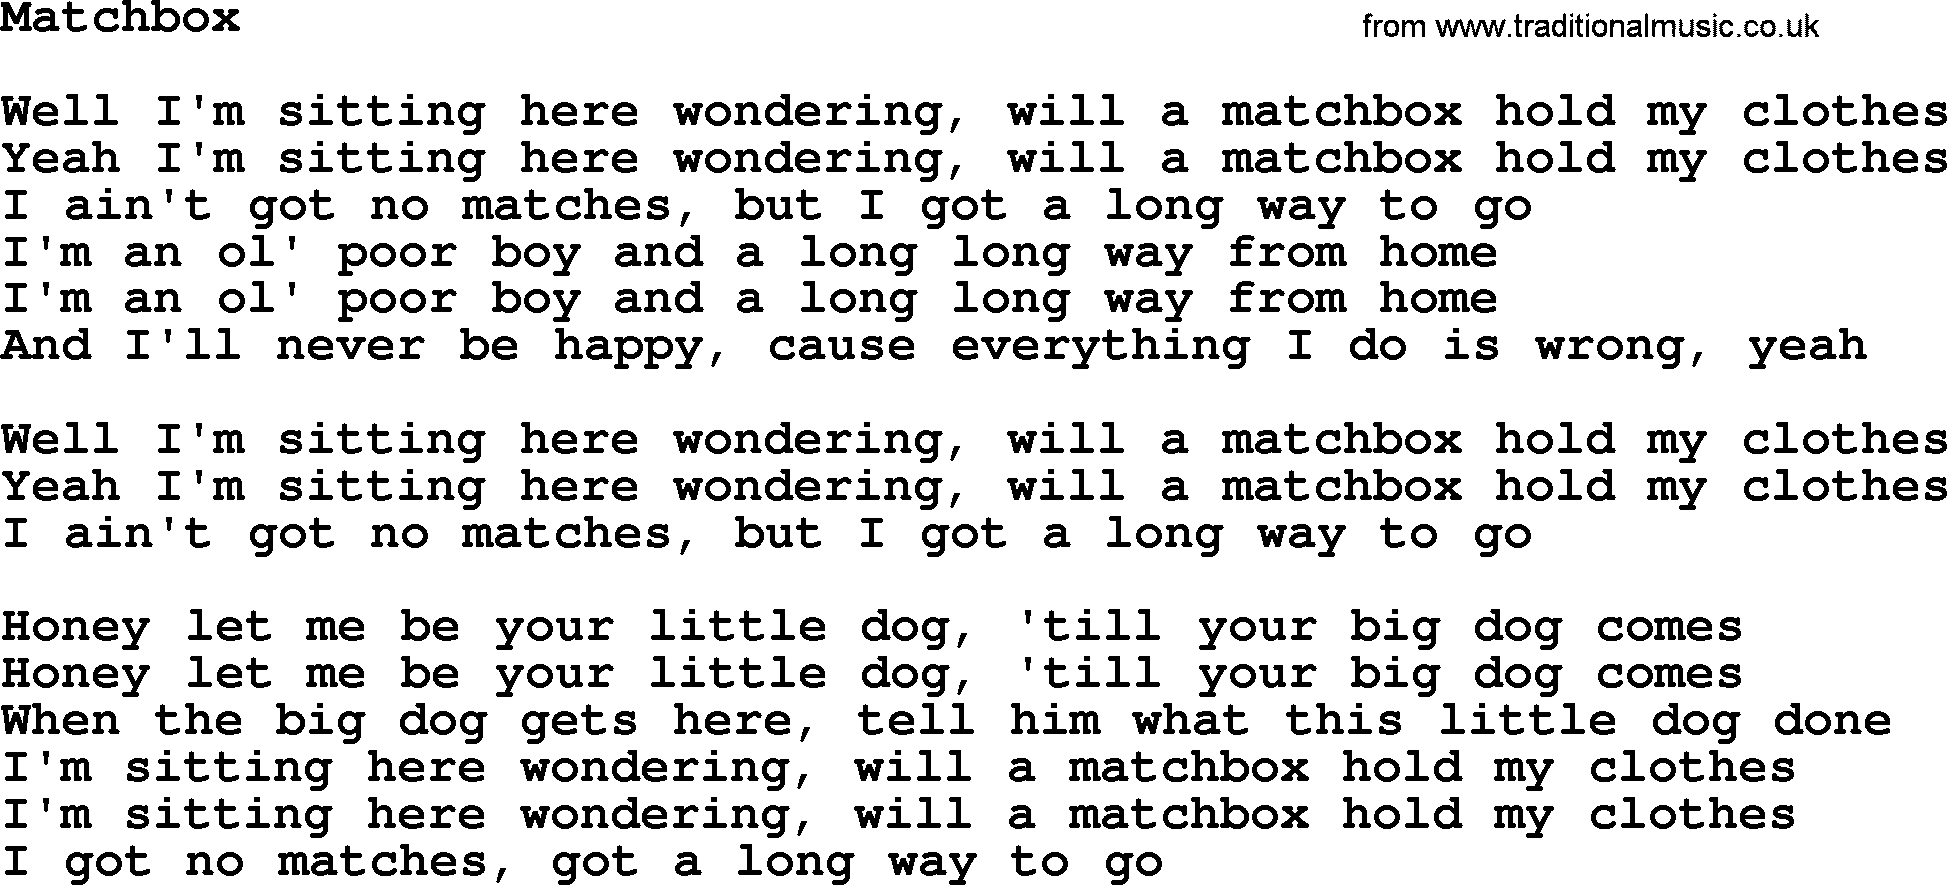 Willie Nelson song: Matchbox lyrics